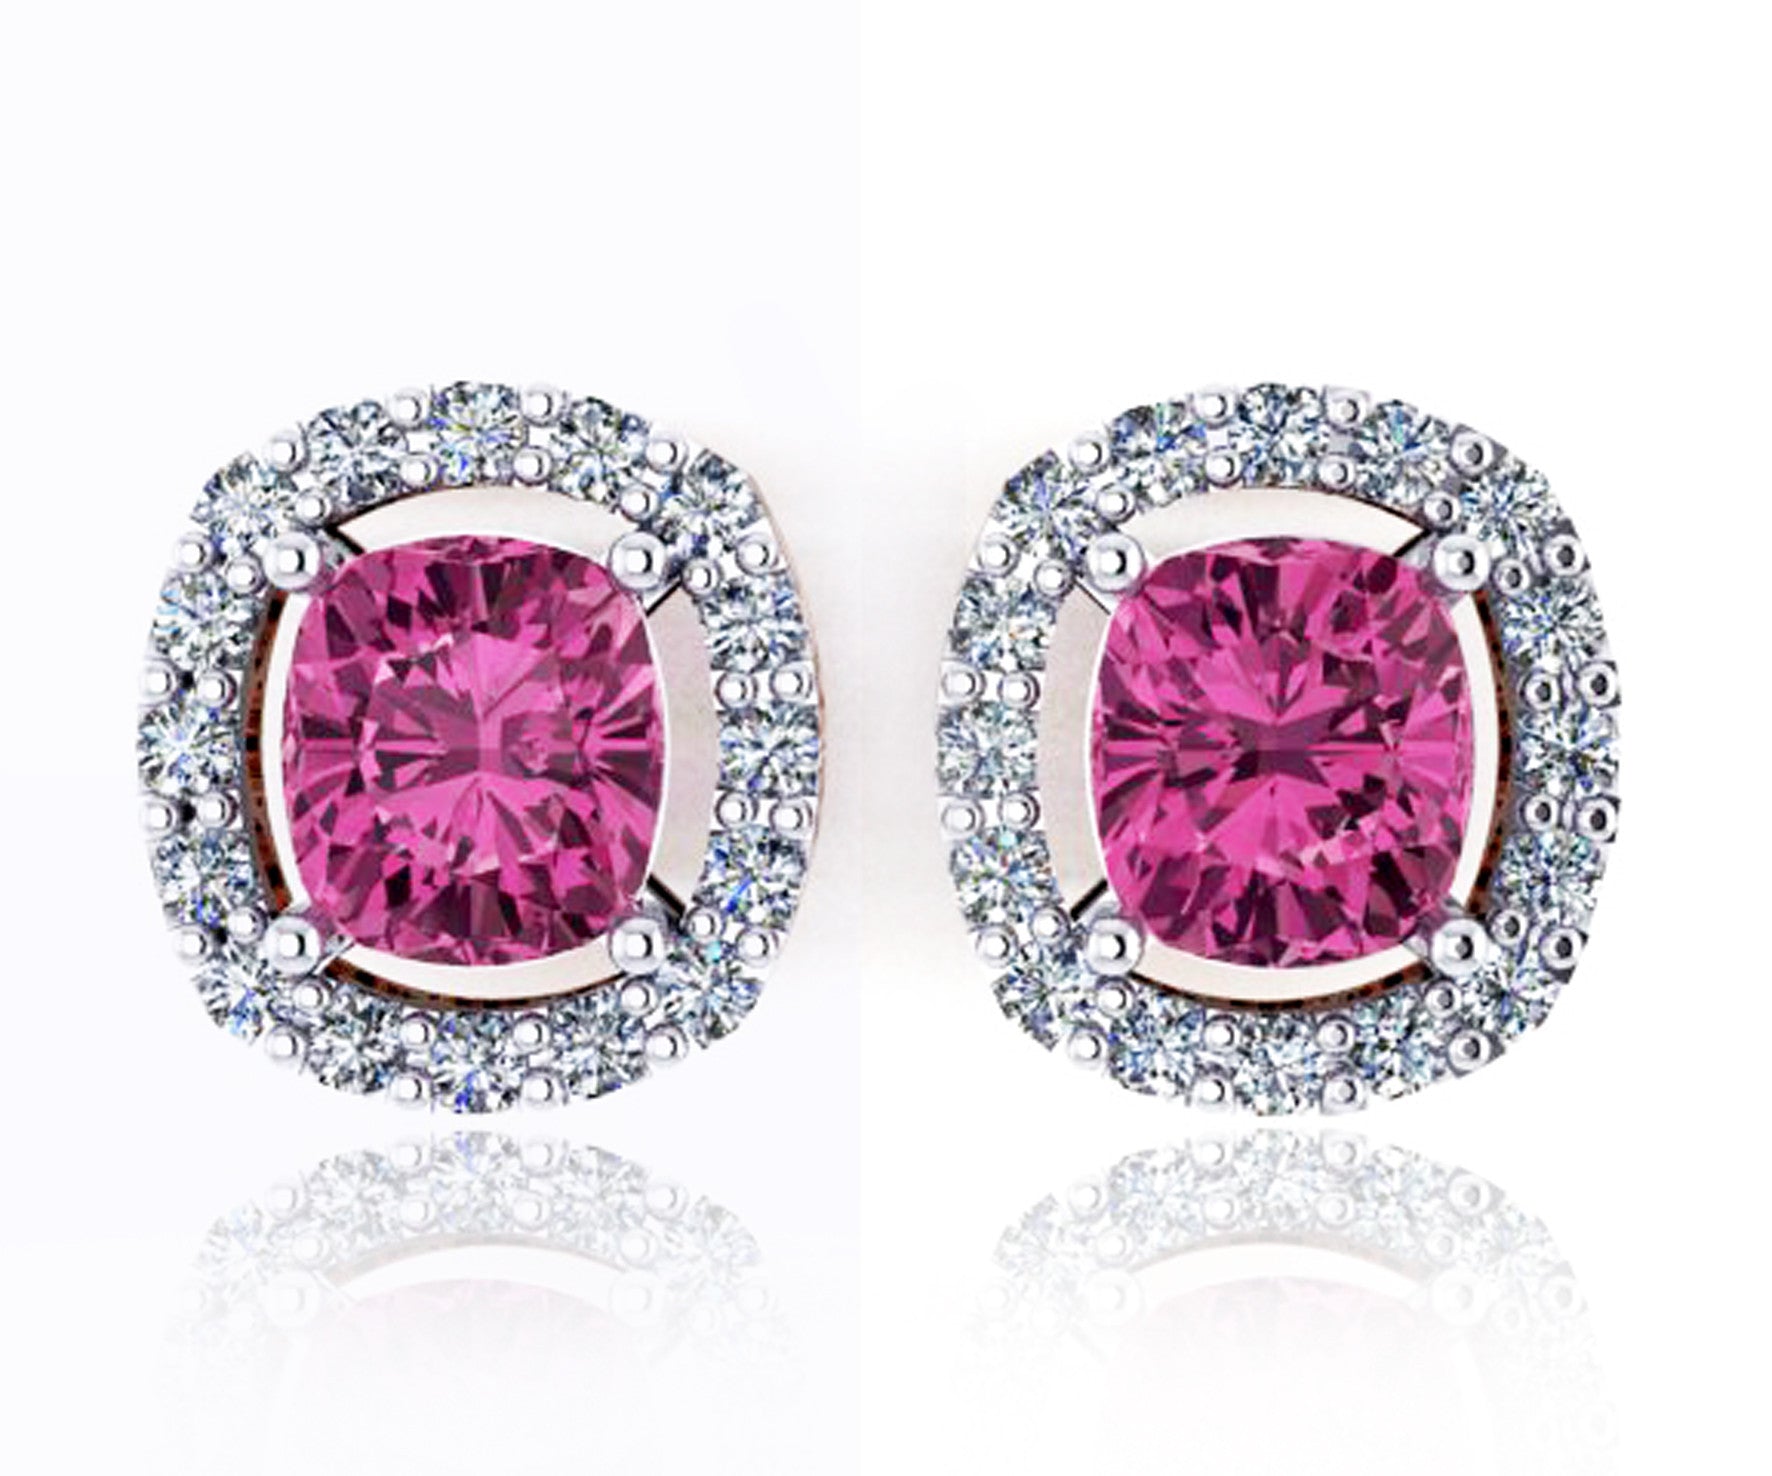 Pink tourmaline diamond halo earring studs - ForeverJewels Design Studio 8